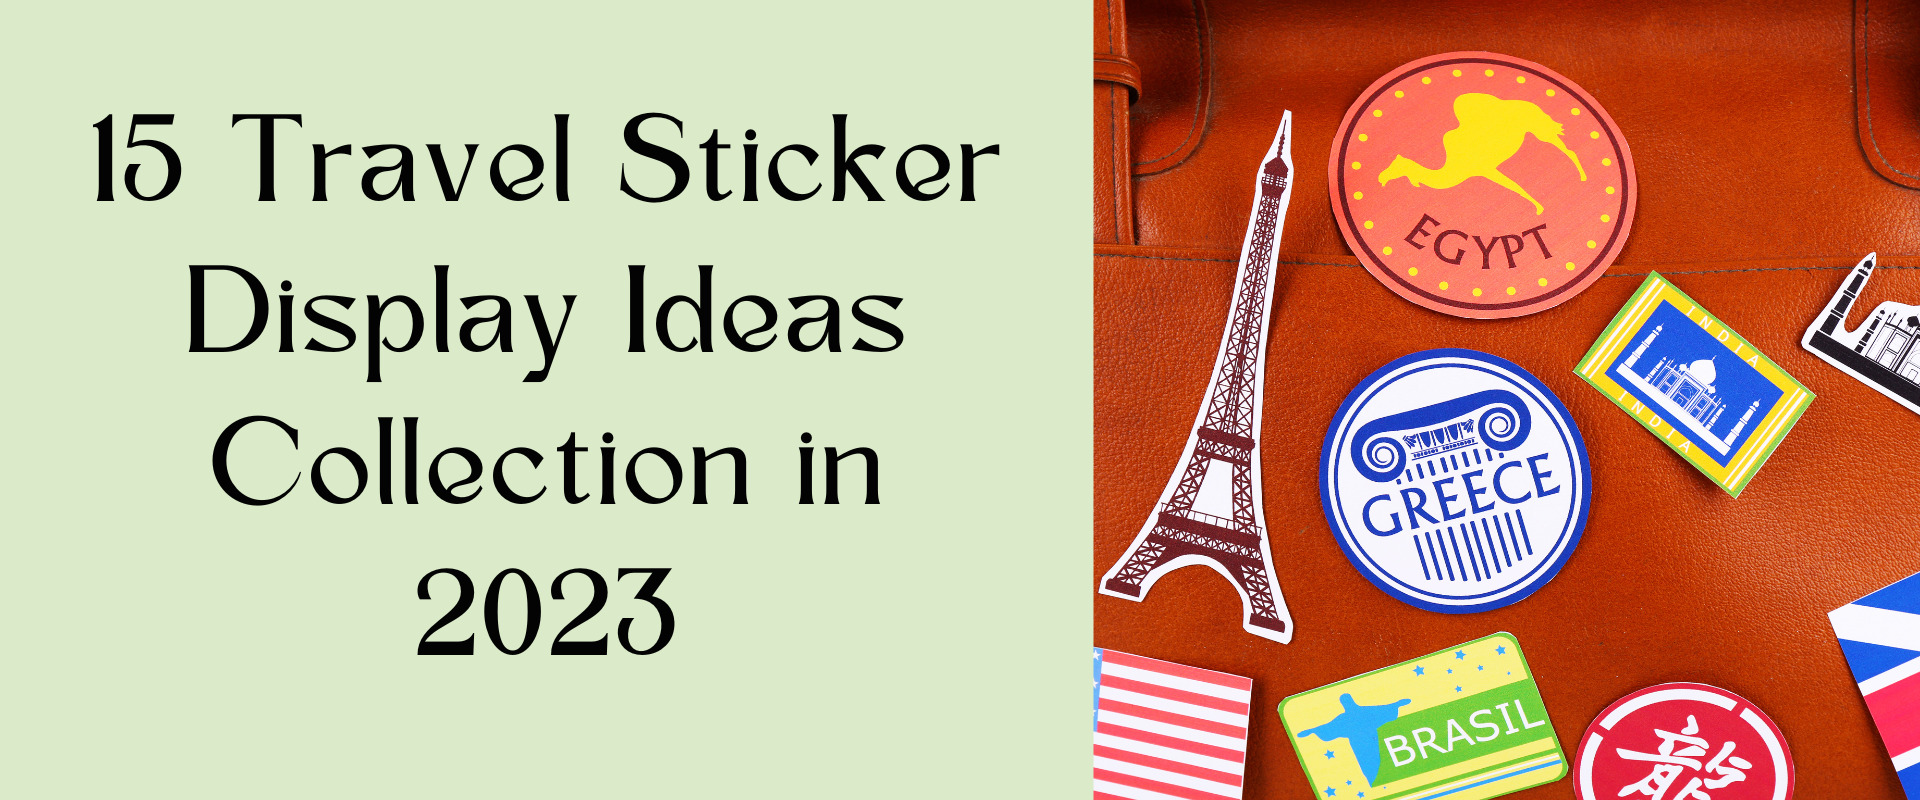 travel sticker display ideas